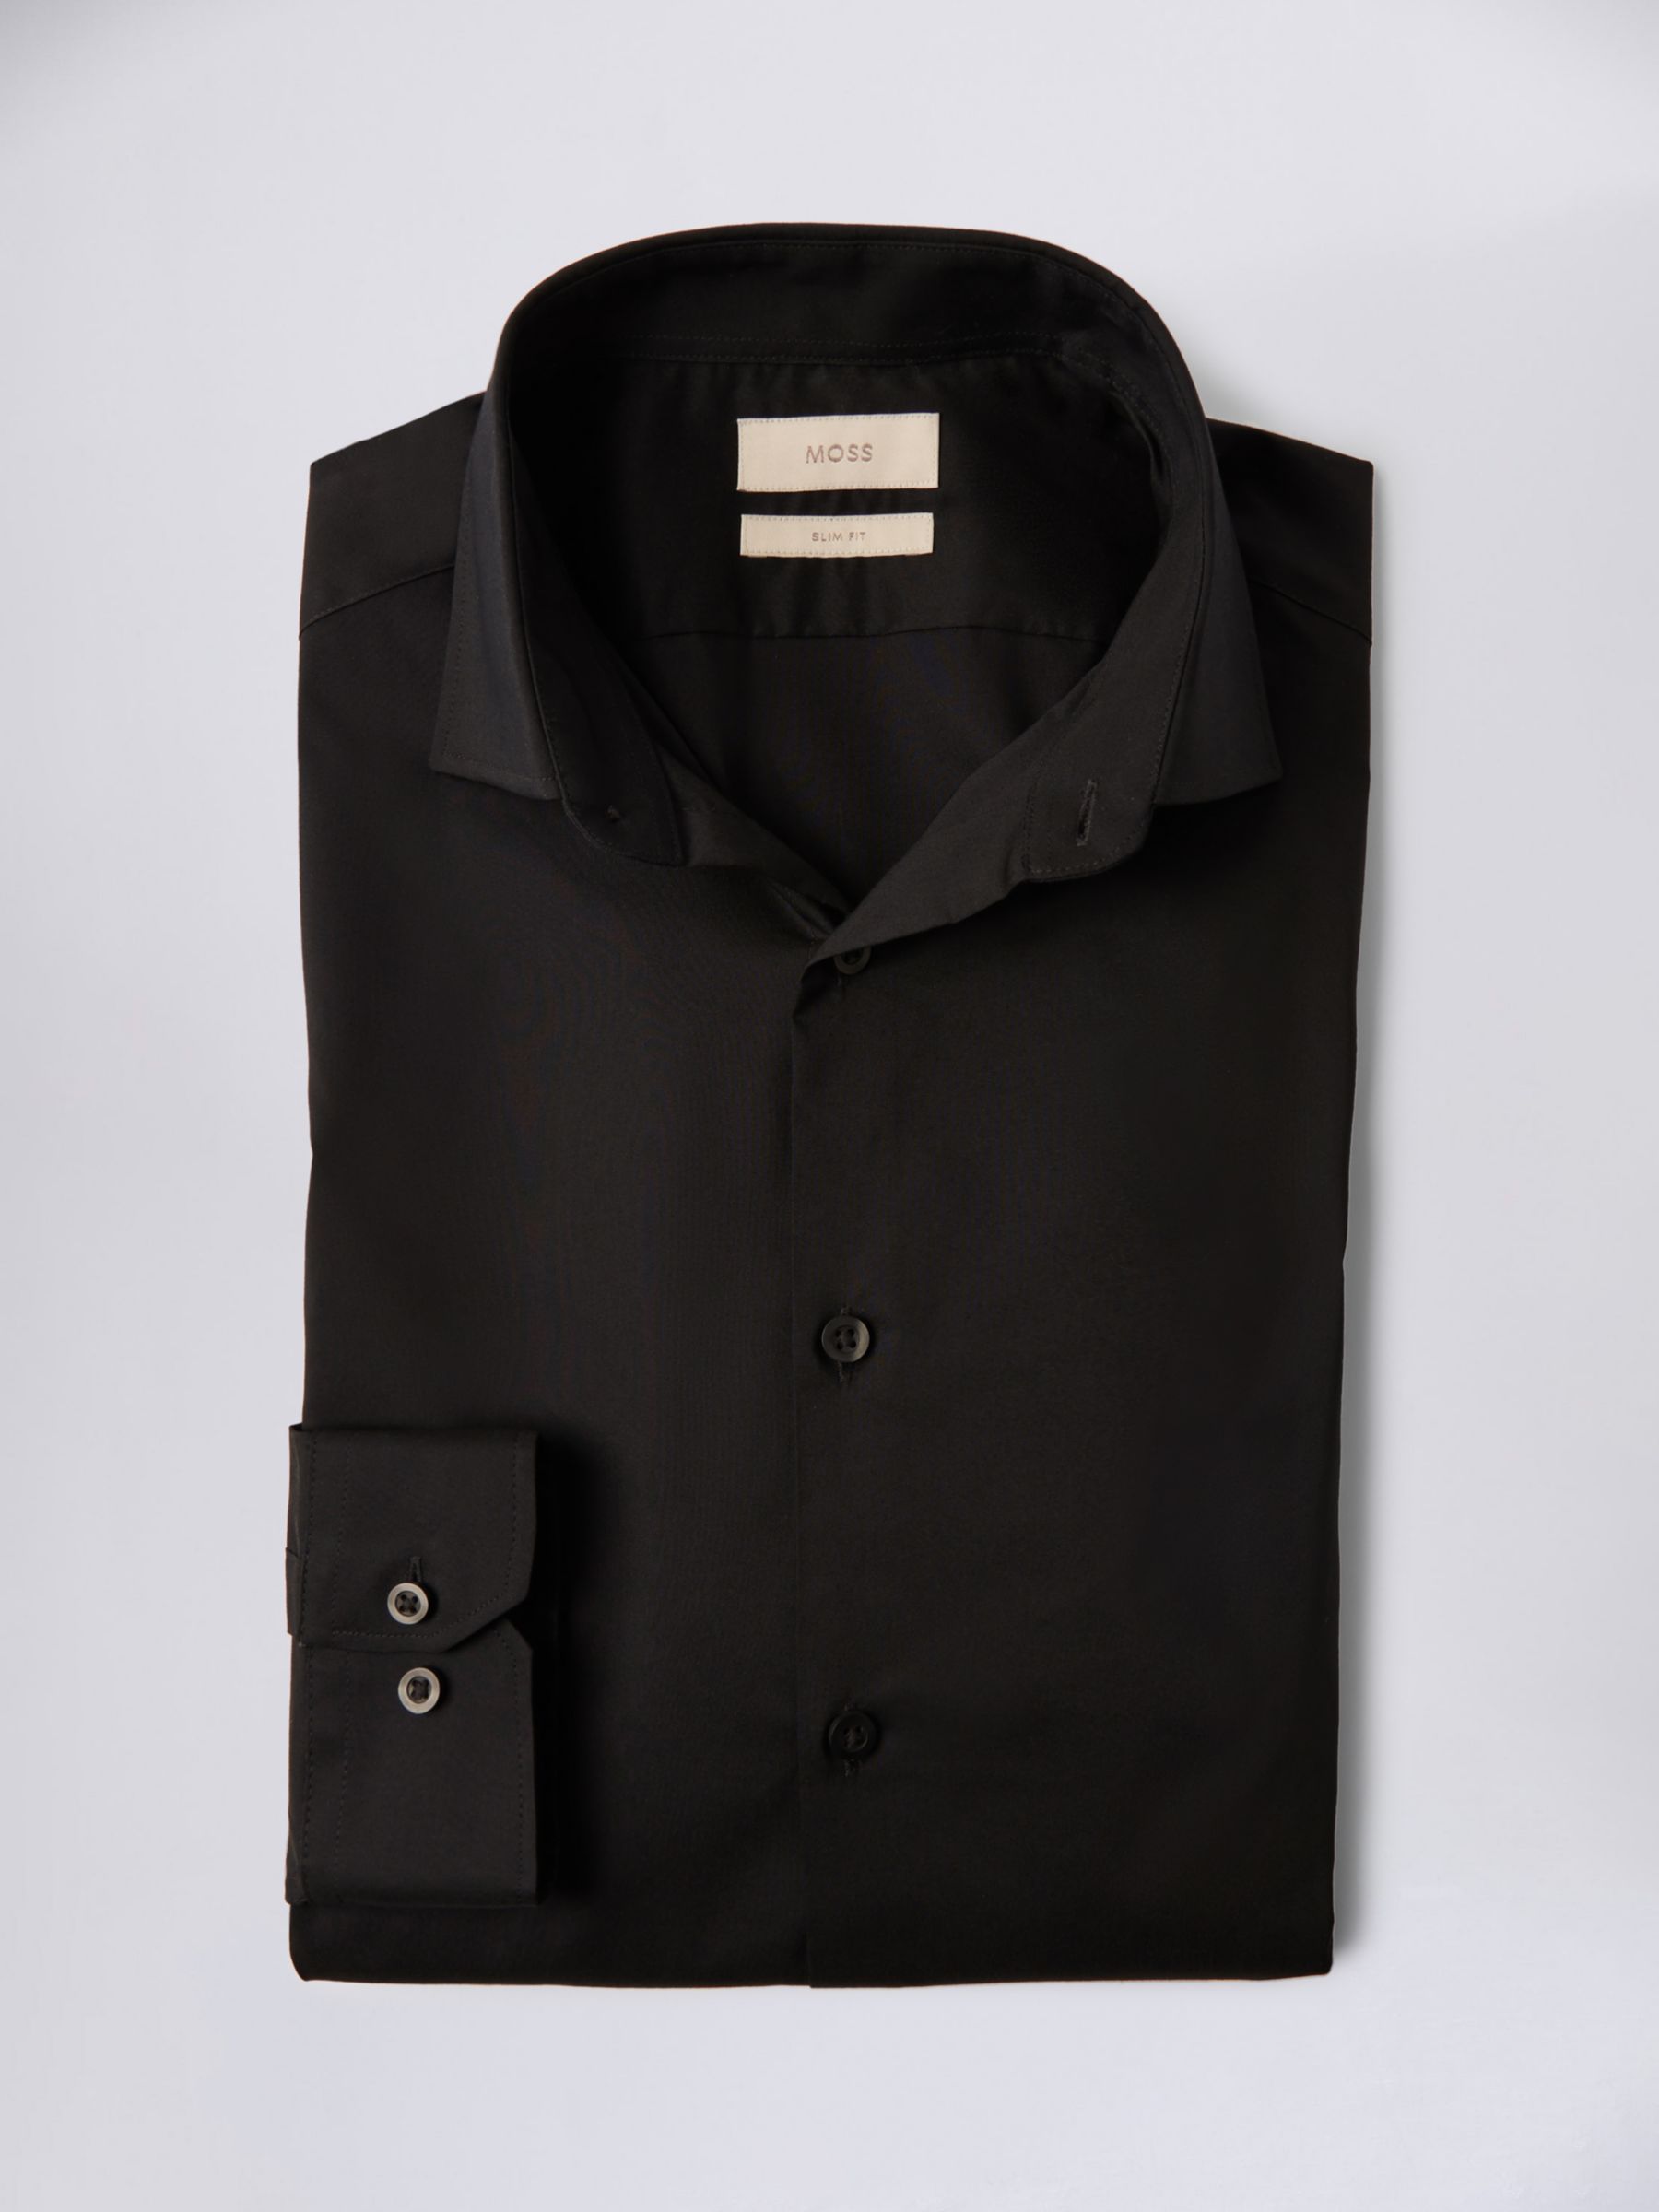 Moss Slim Stretch Shirt, Black, 13.5